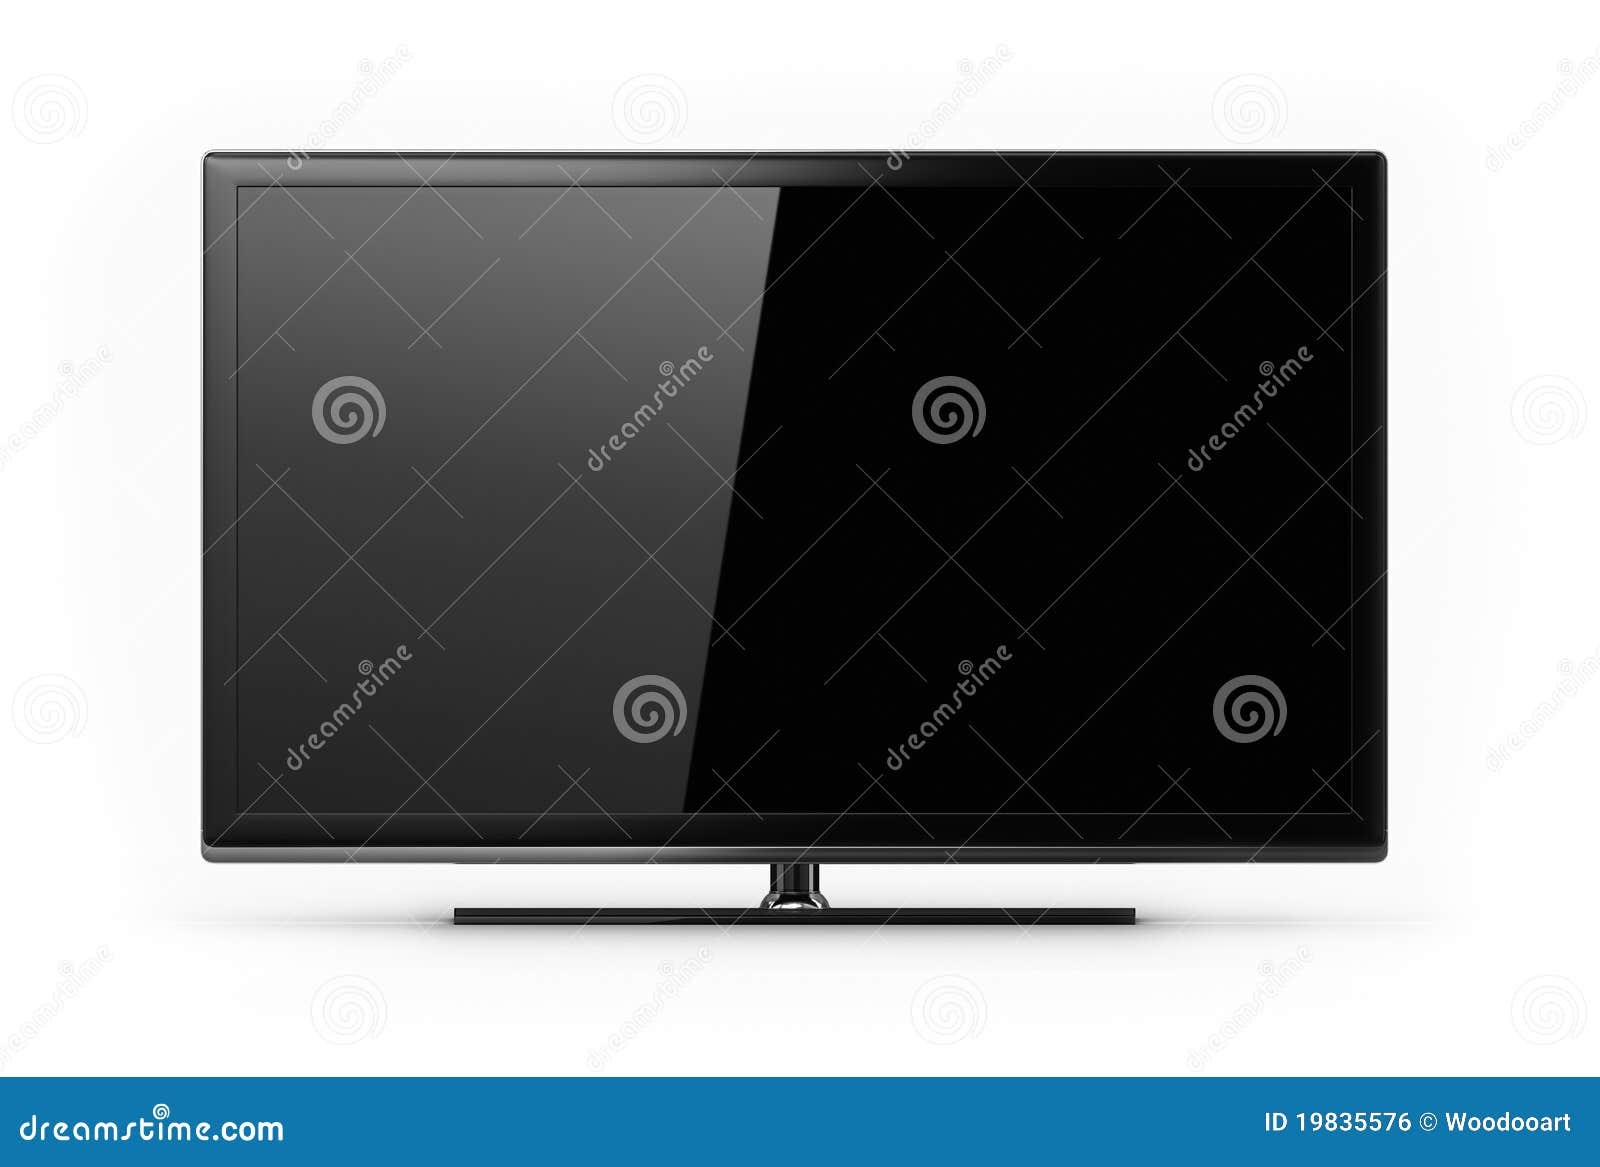 lcd screen tv